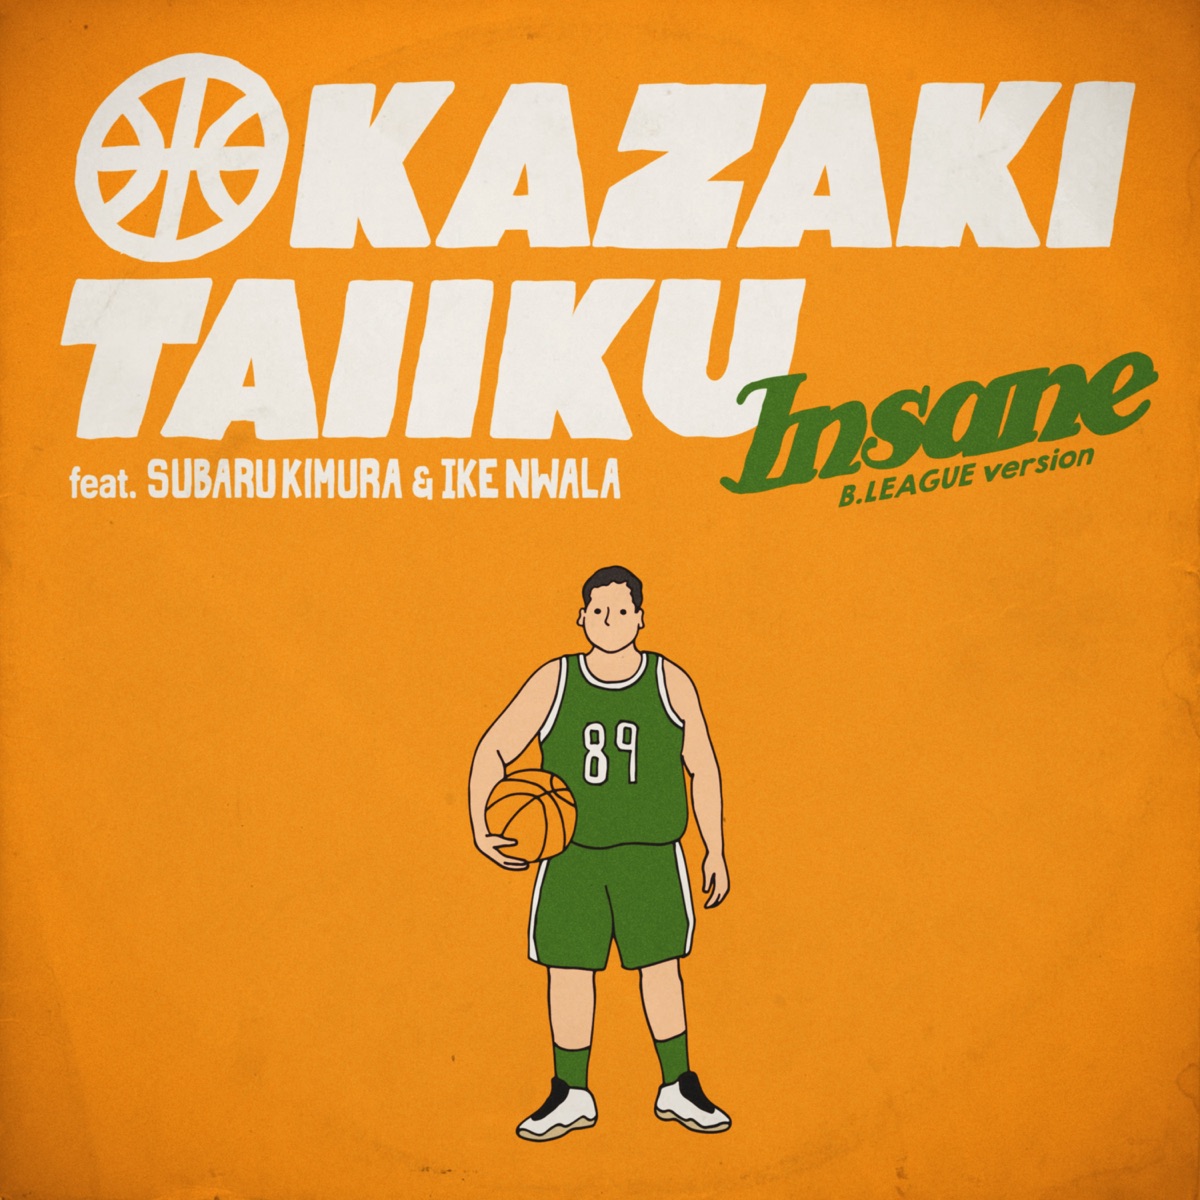 Cover art for『okazakitaiiku featuring Subaru Kimura & Ike Nwala - Insane (B.LEAGUE version)』from the release『Insane (B.LEAGUE version)』